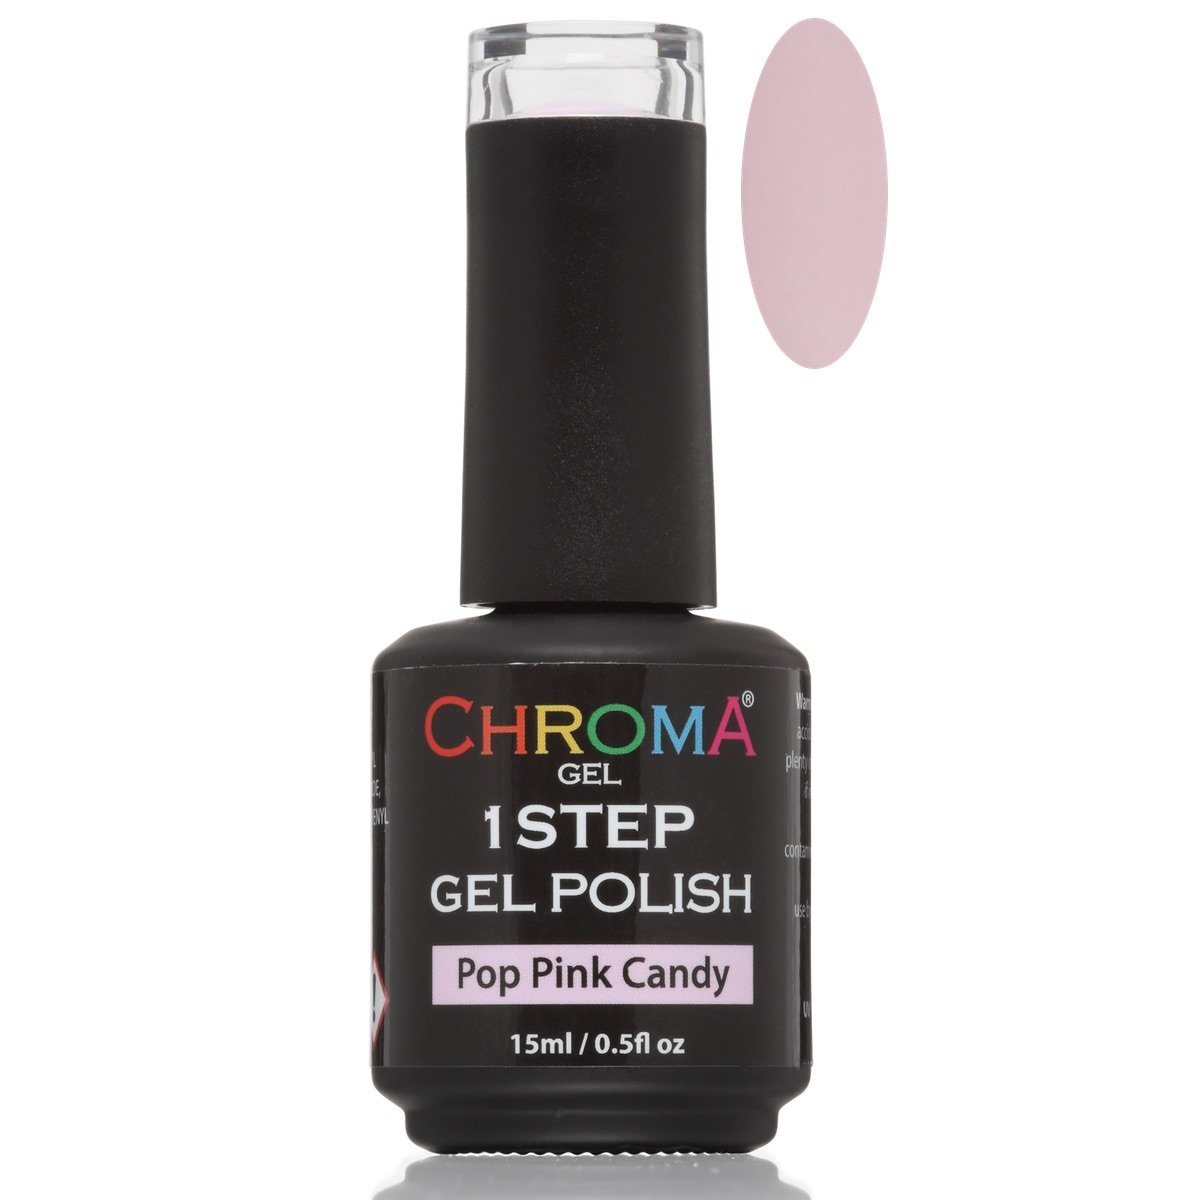 Chroma Gel Gel 1 Step Gel Polish Pop Pink Candy No.79 - Beauty Hair Products LtdNails